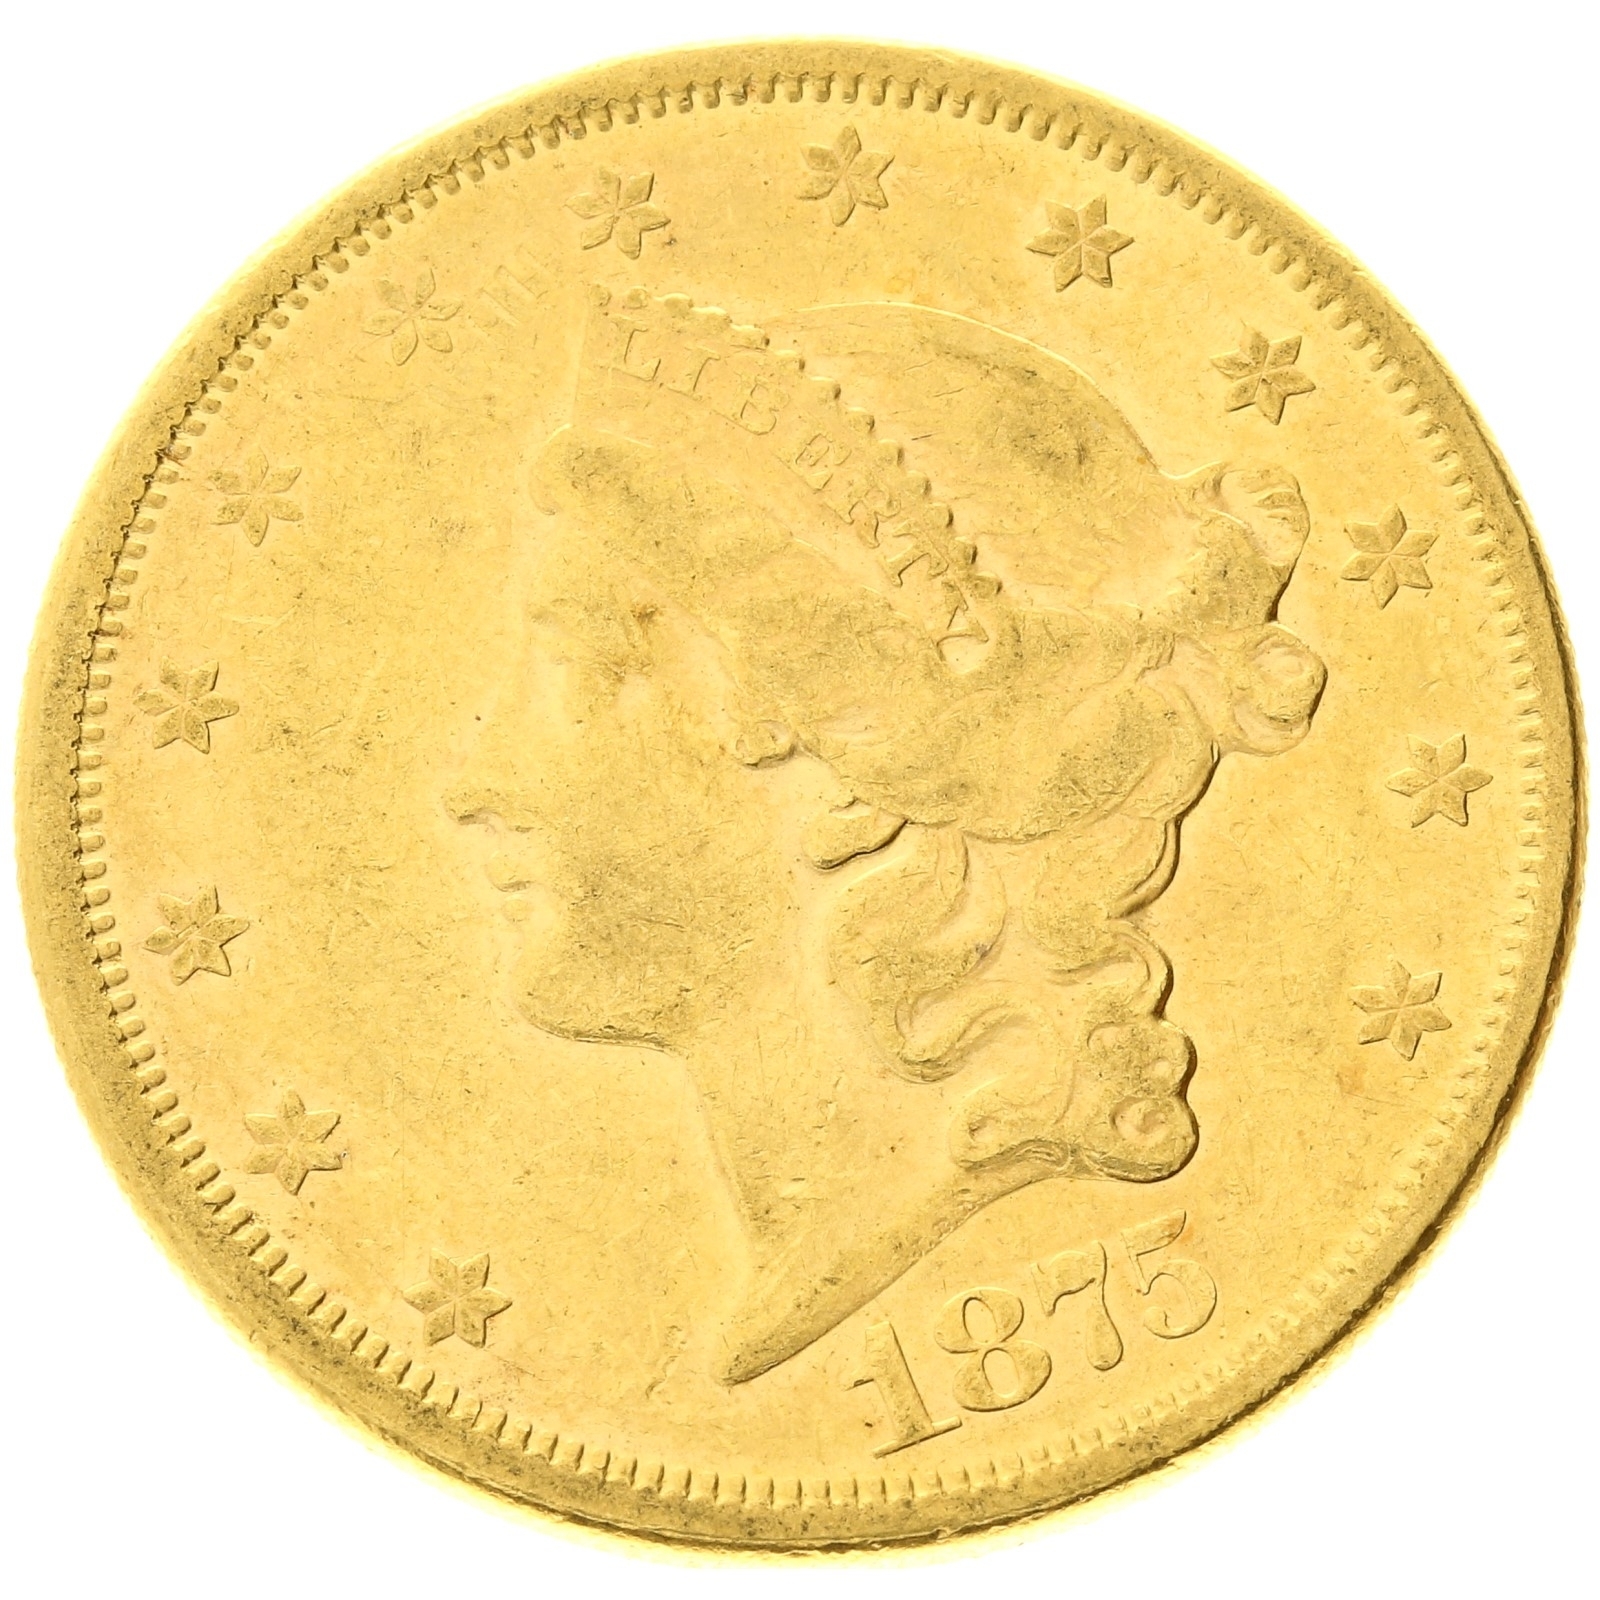 USA - 20 dollars 1875 - S - Liberty head